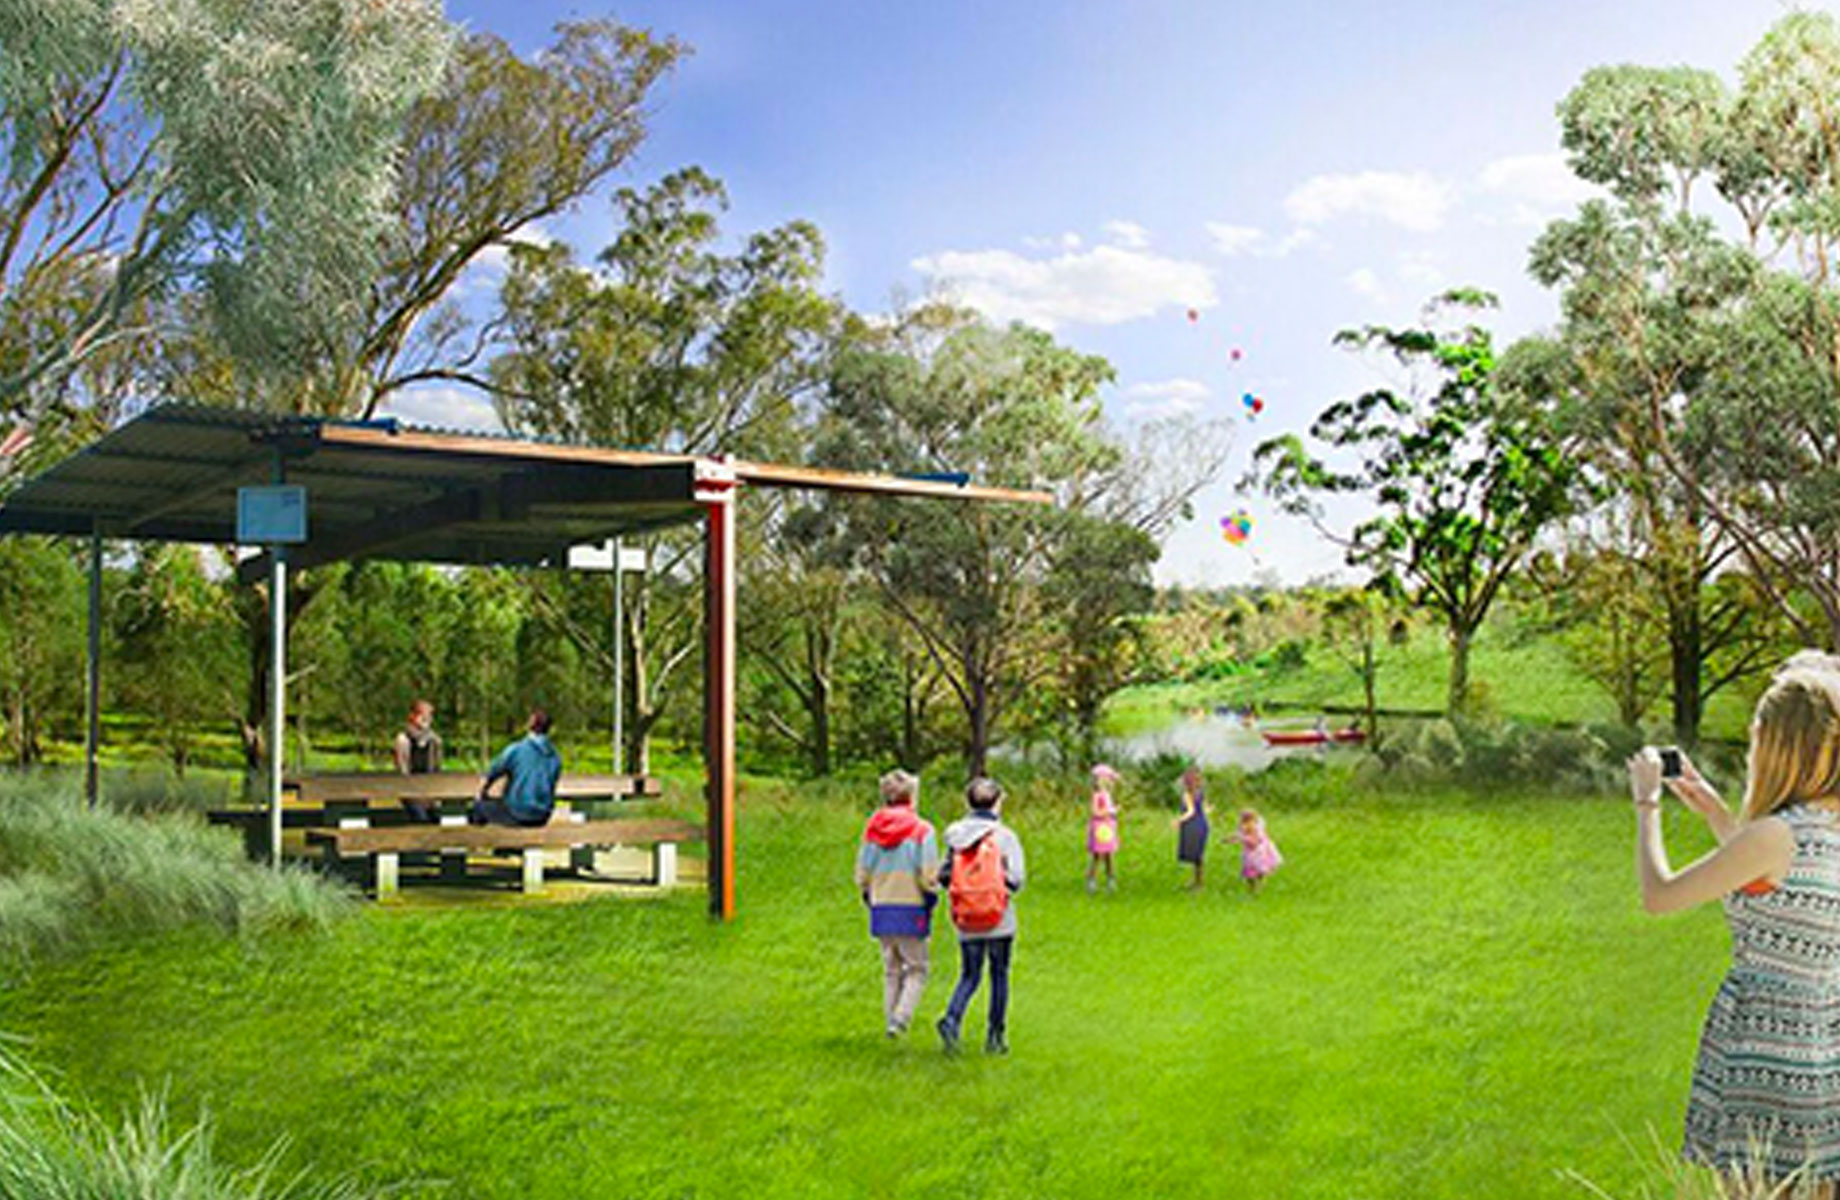 Southern Parklands Vision 2036 (NSW) - Turf Design and TDEP